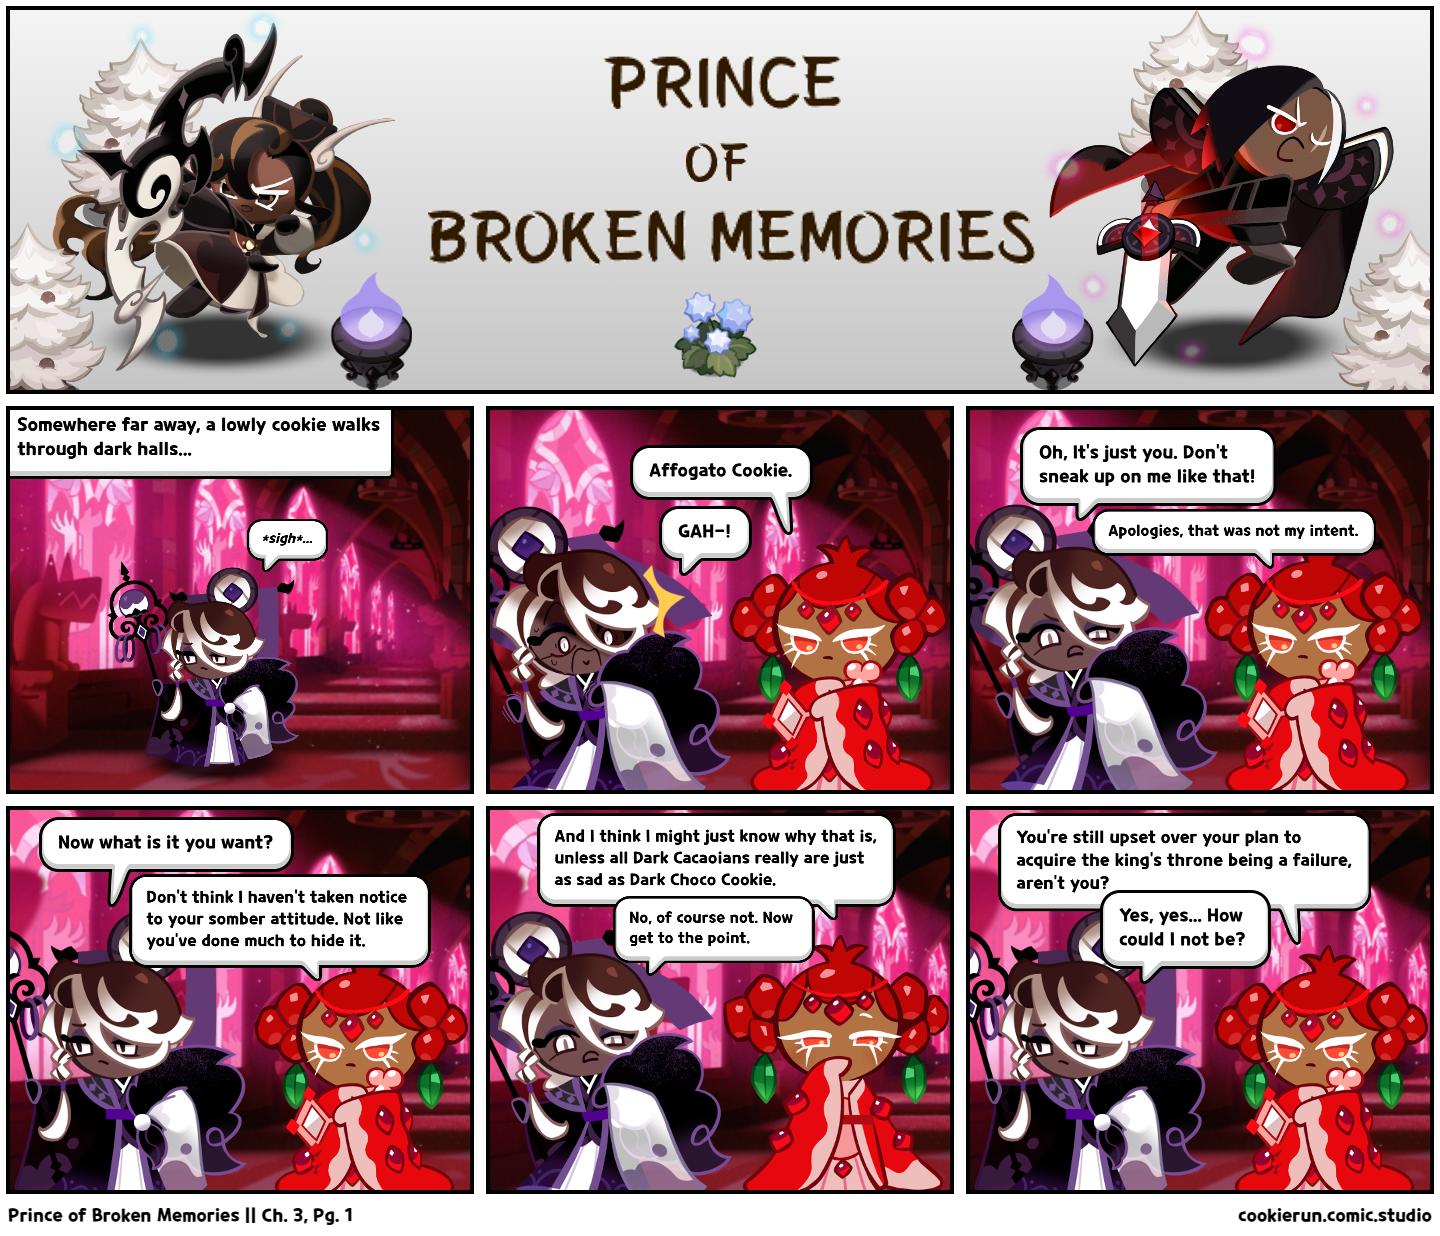 Prince of Broken Memories || Ch. 3, Pg. 1